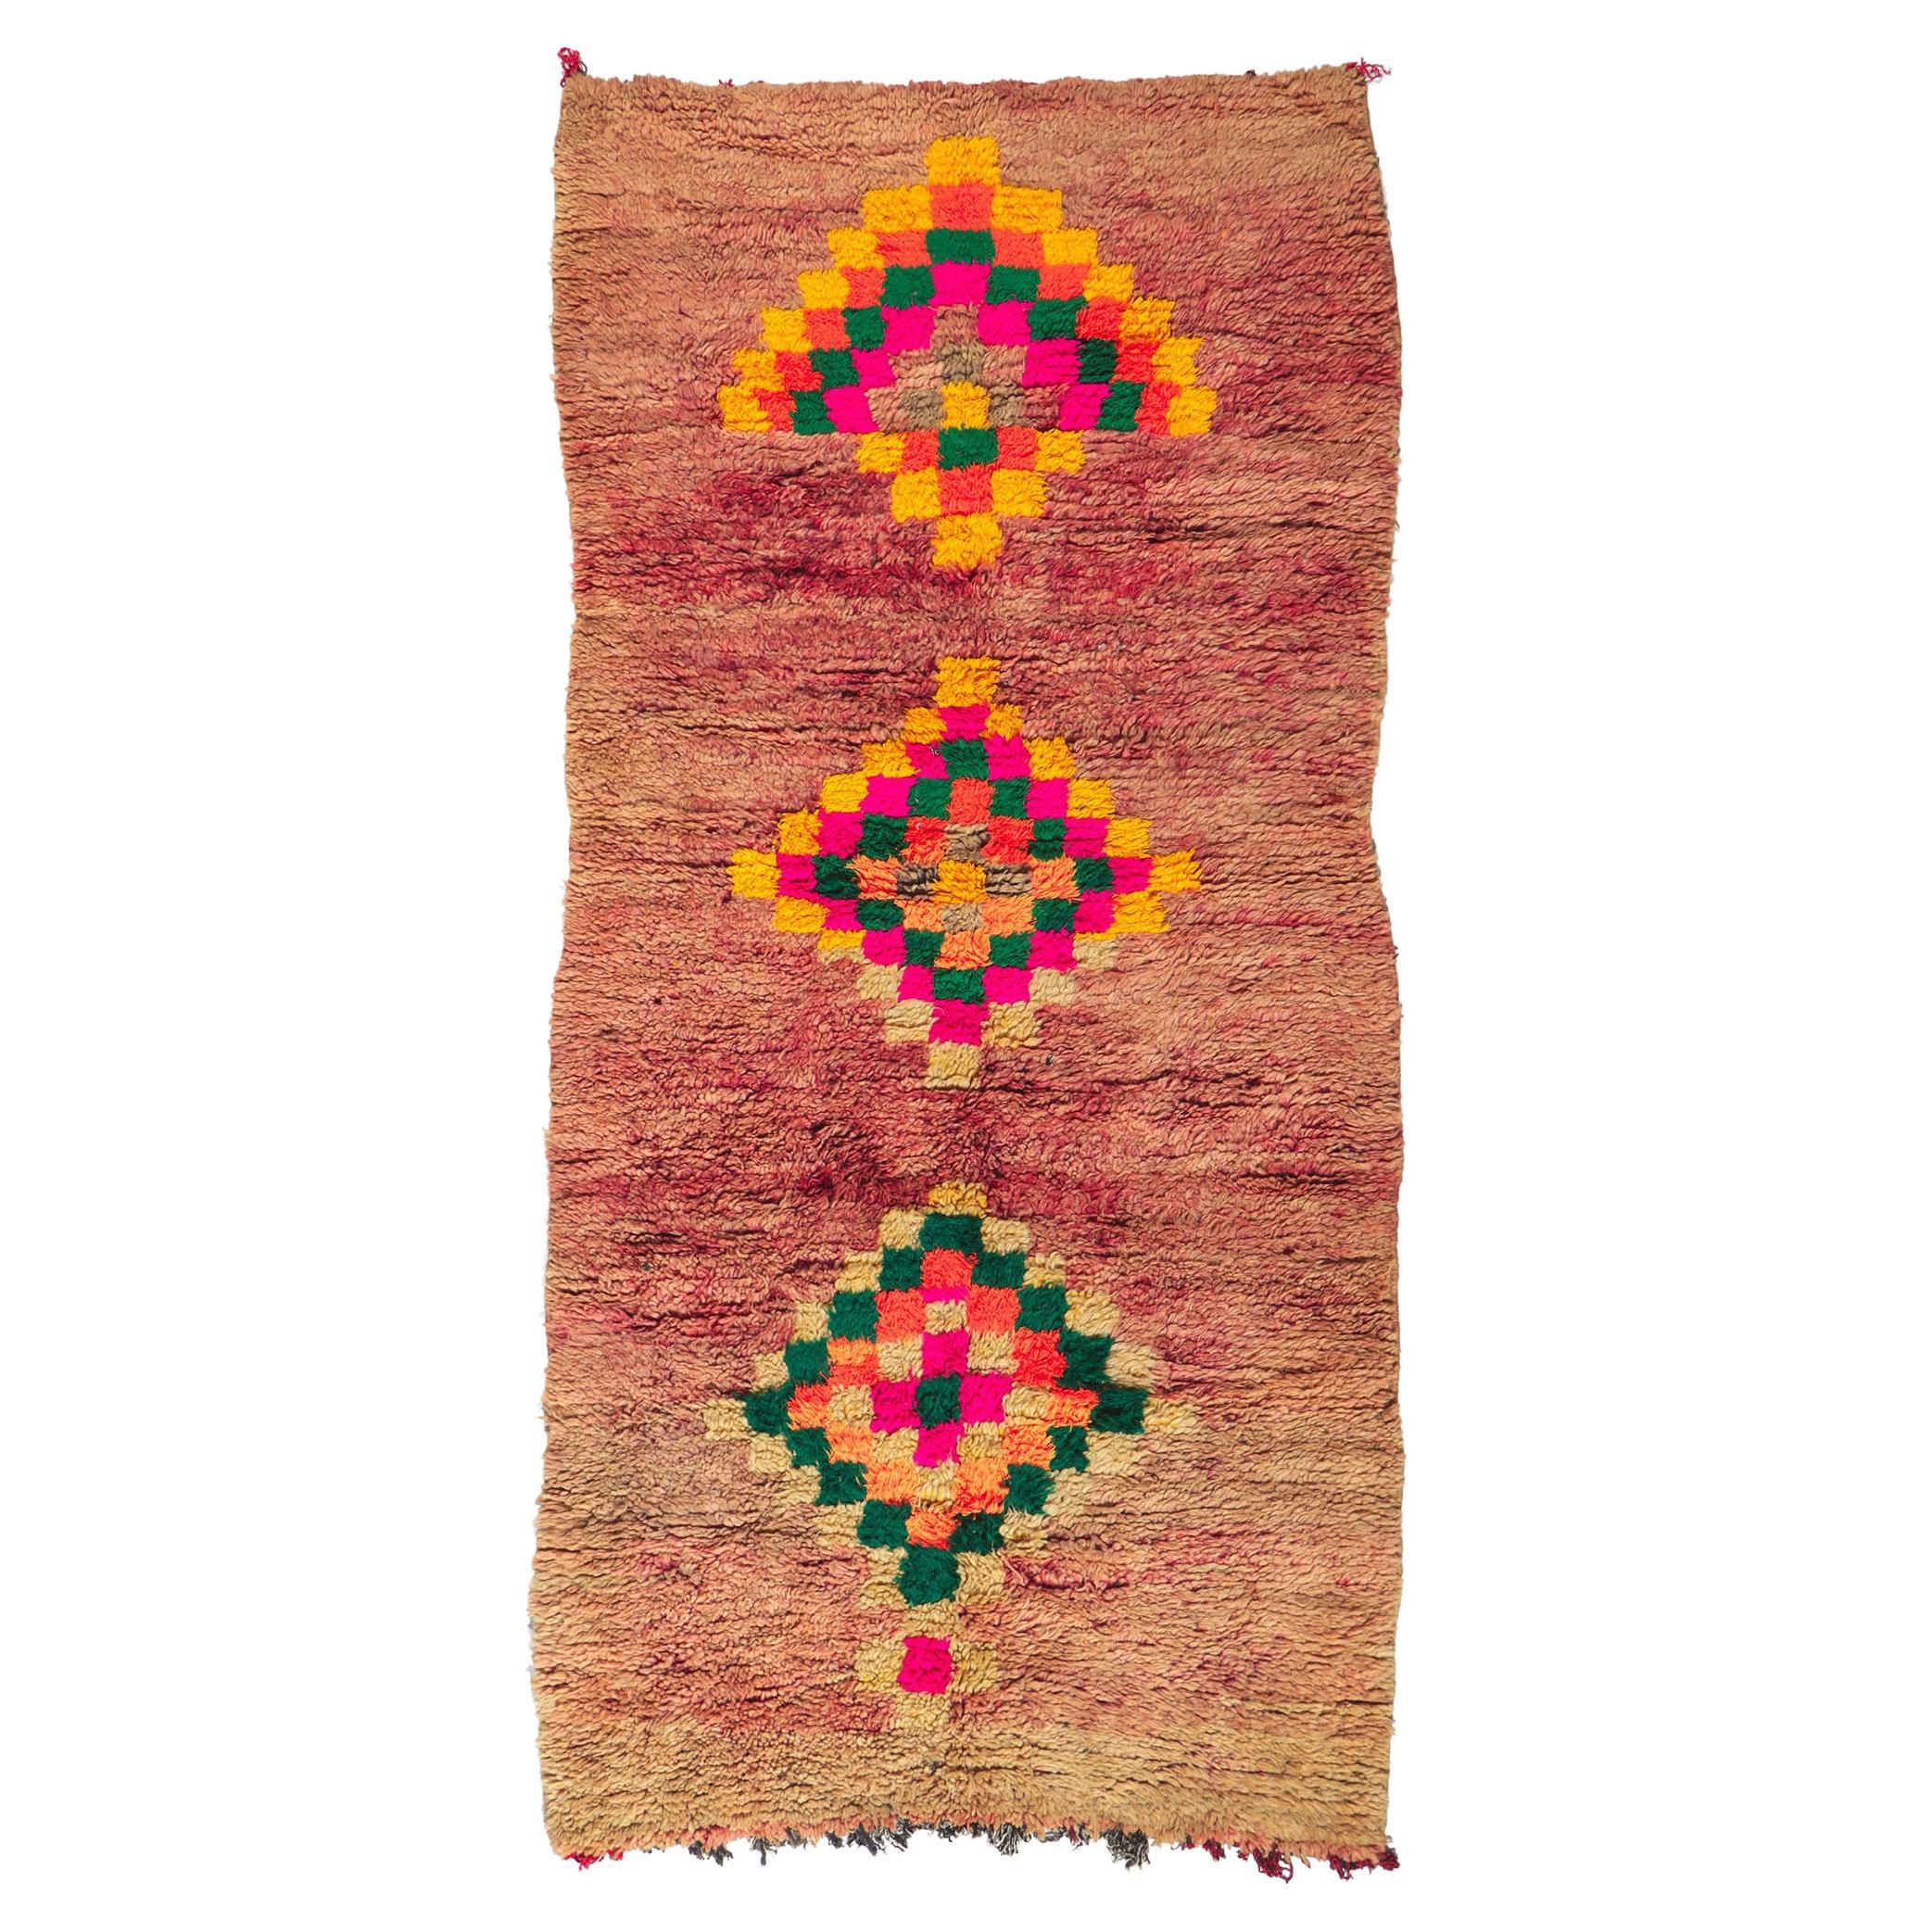 Vintage Berber Moroccan Rug, Gypset Chic Meets Boho Glam For Sale